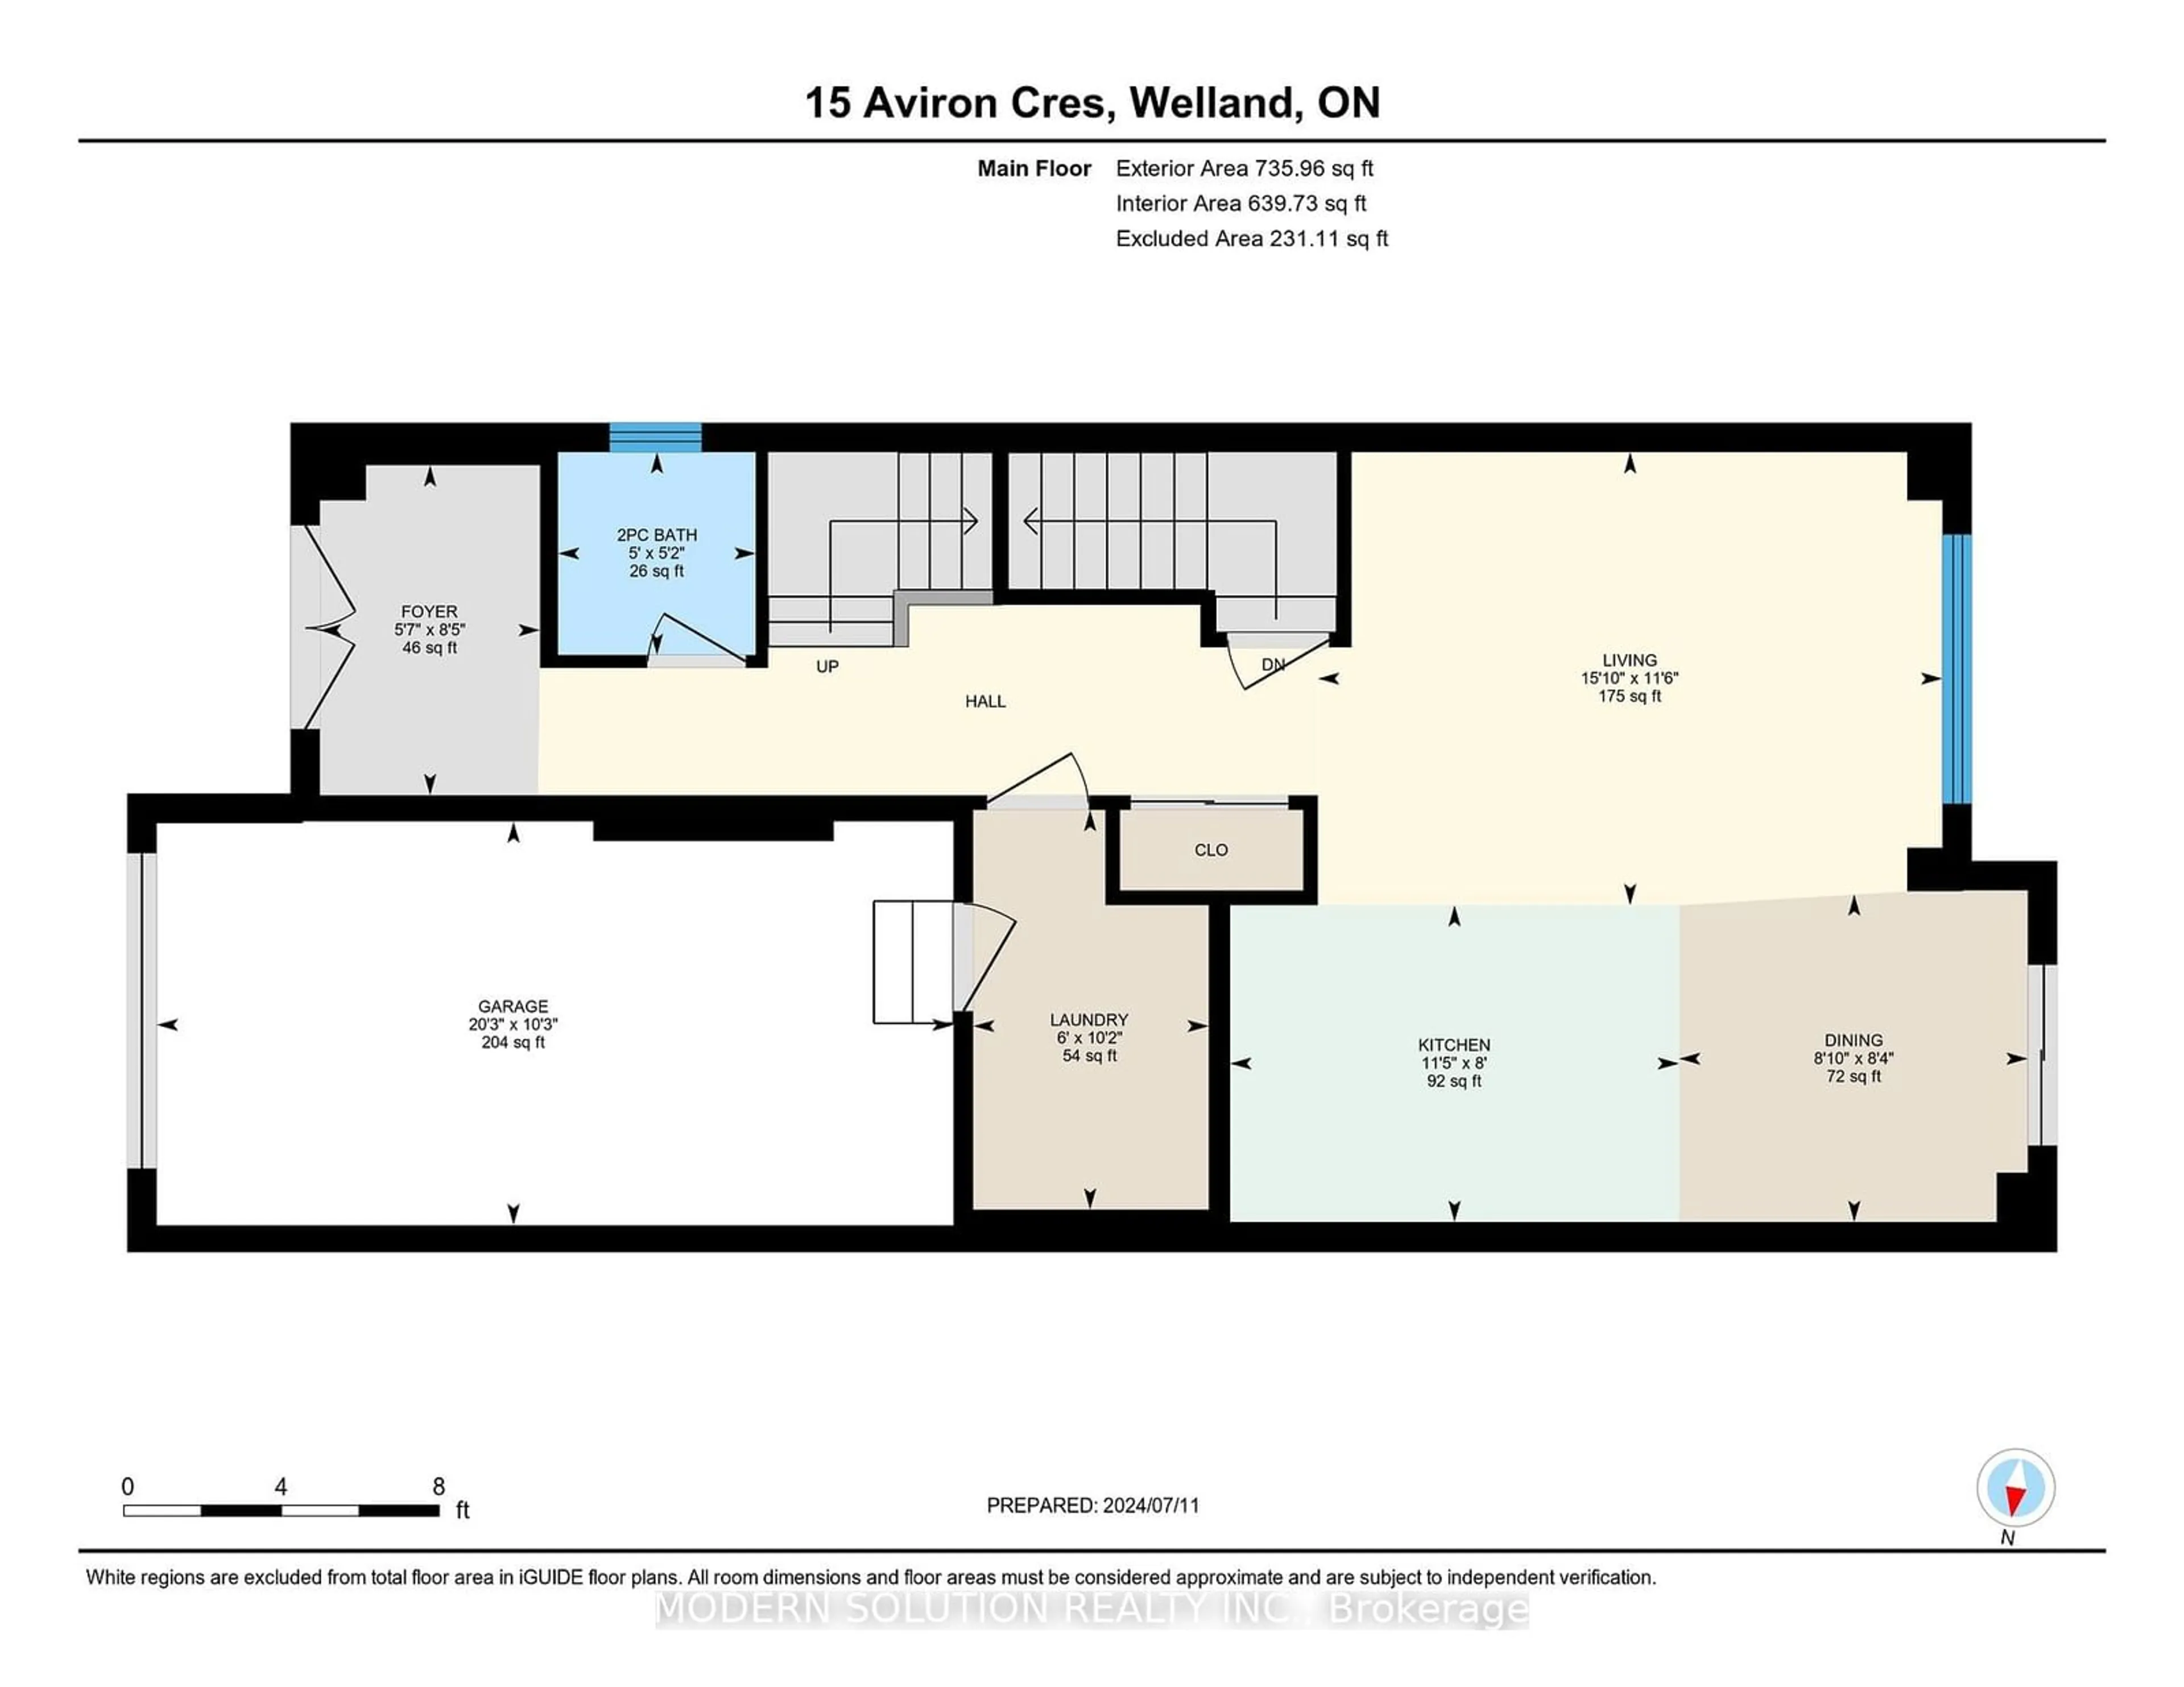 Floor plan for 15 Aviron Cres, Welland Ontario L3B 0M3